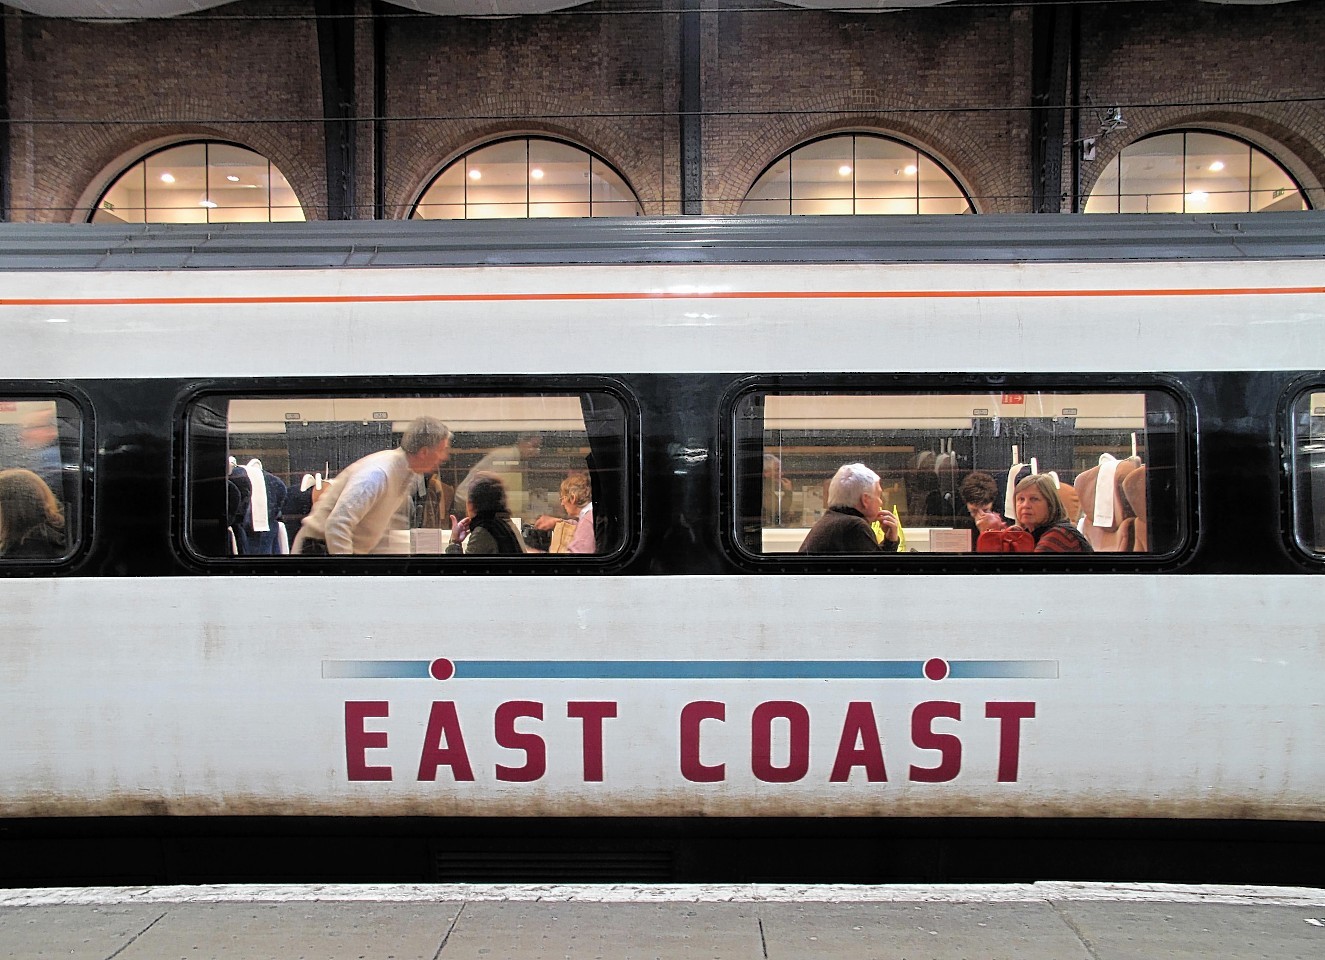 East Coast trains